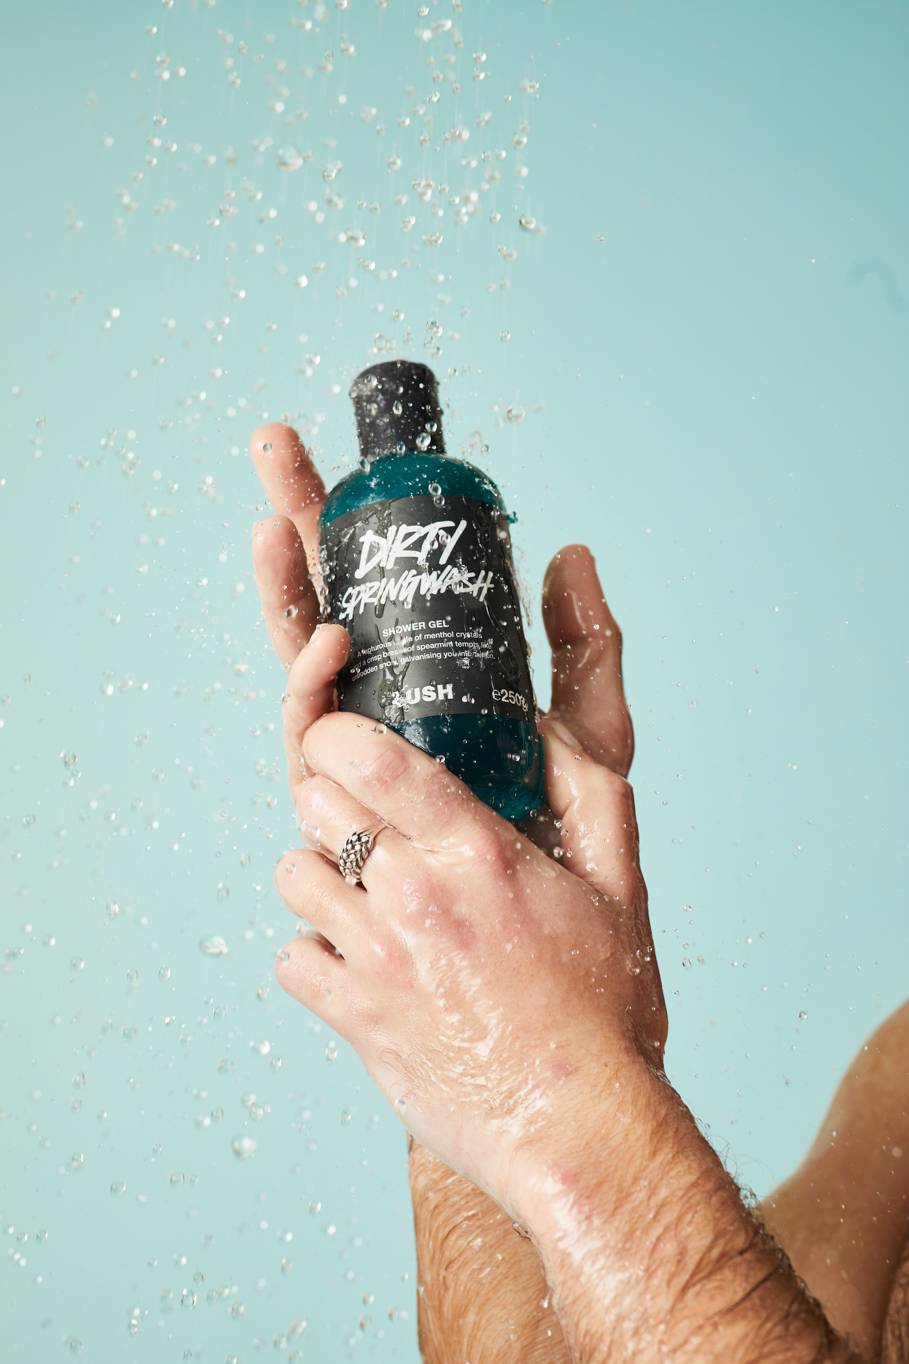 A close-up of hands holding the Dirty Springwash shower gel bottle under a shower stream on a light blue background.